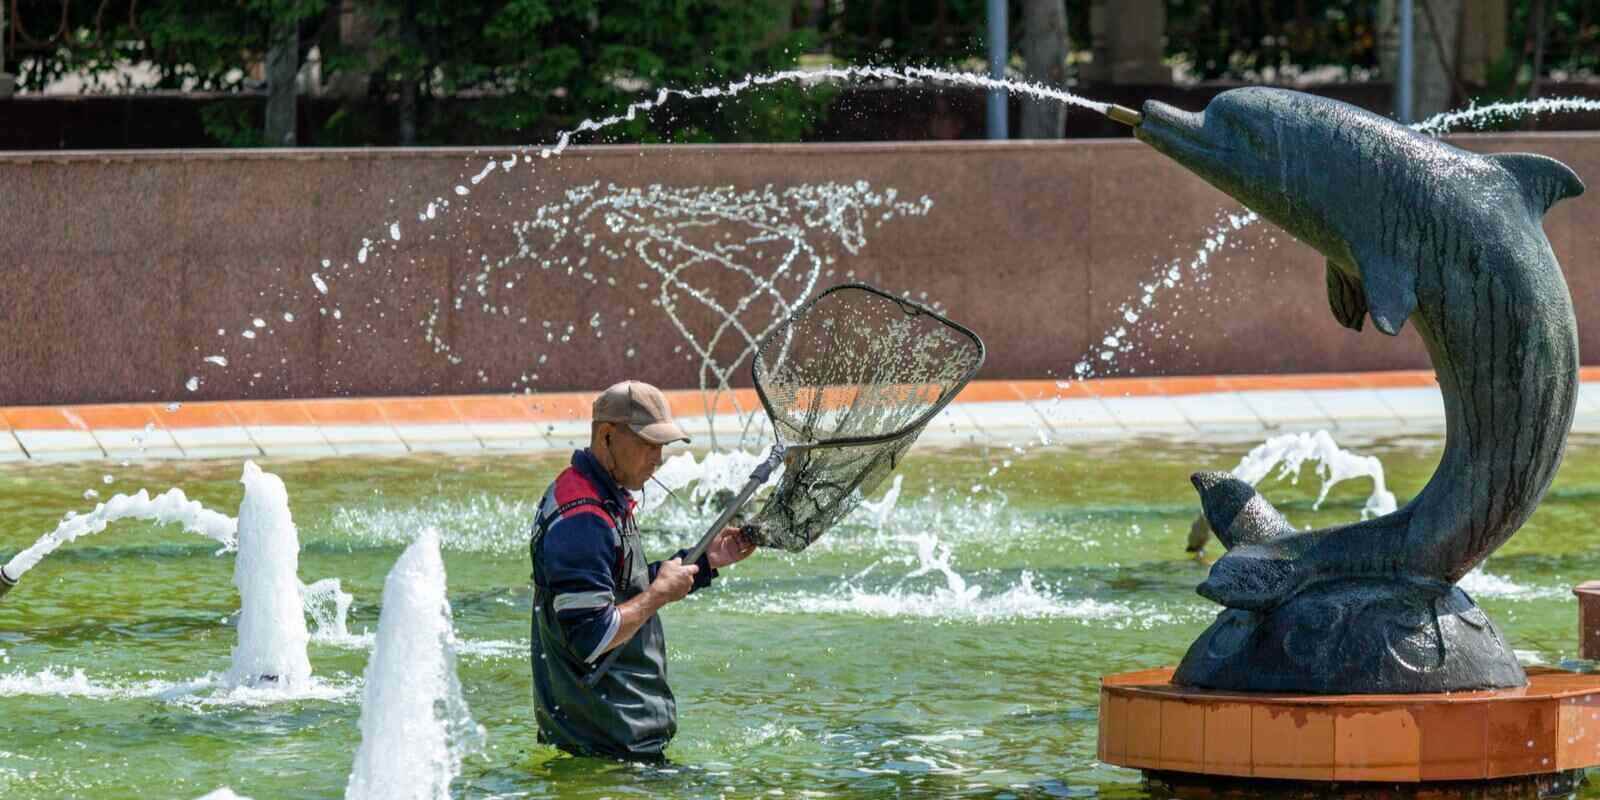 man cleans a fountain in a city park